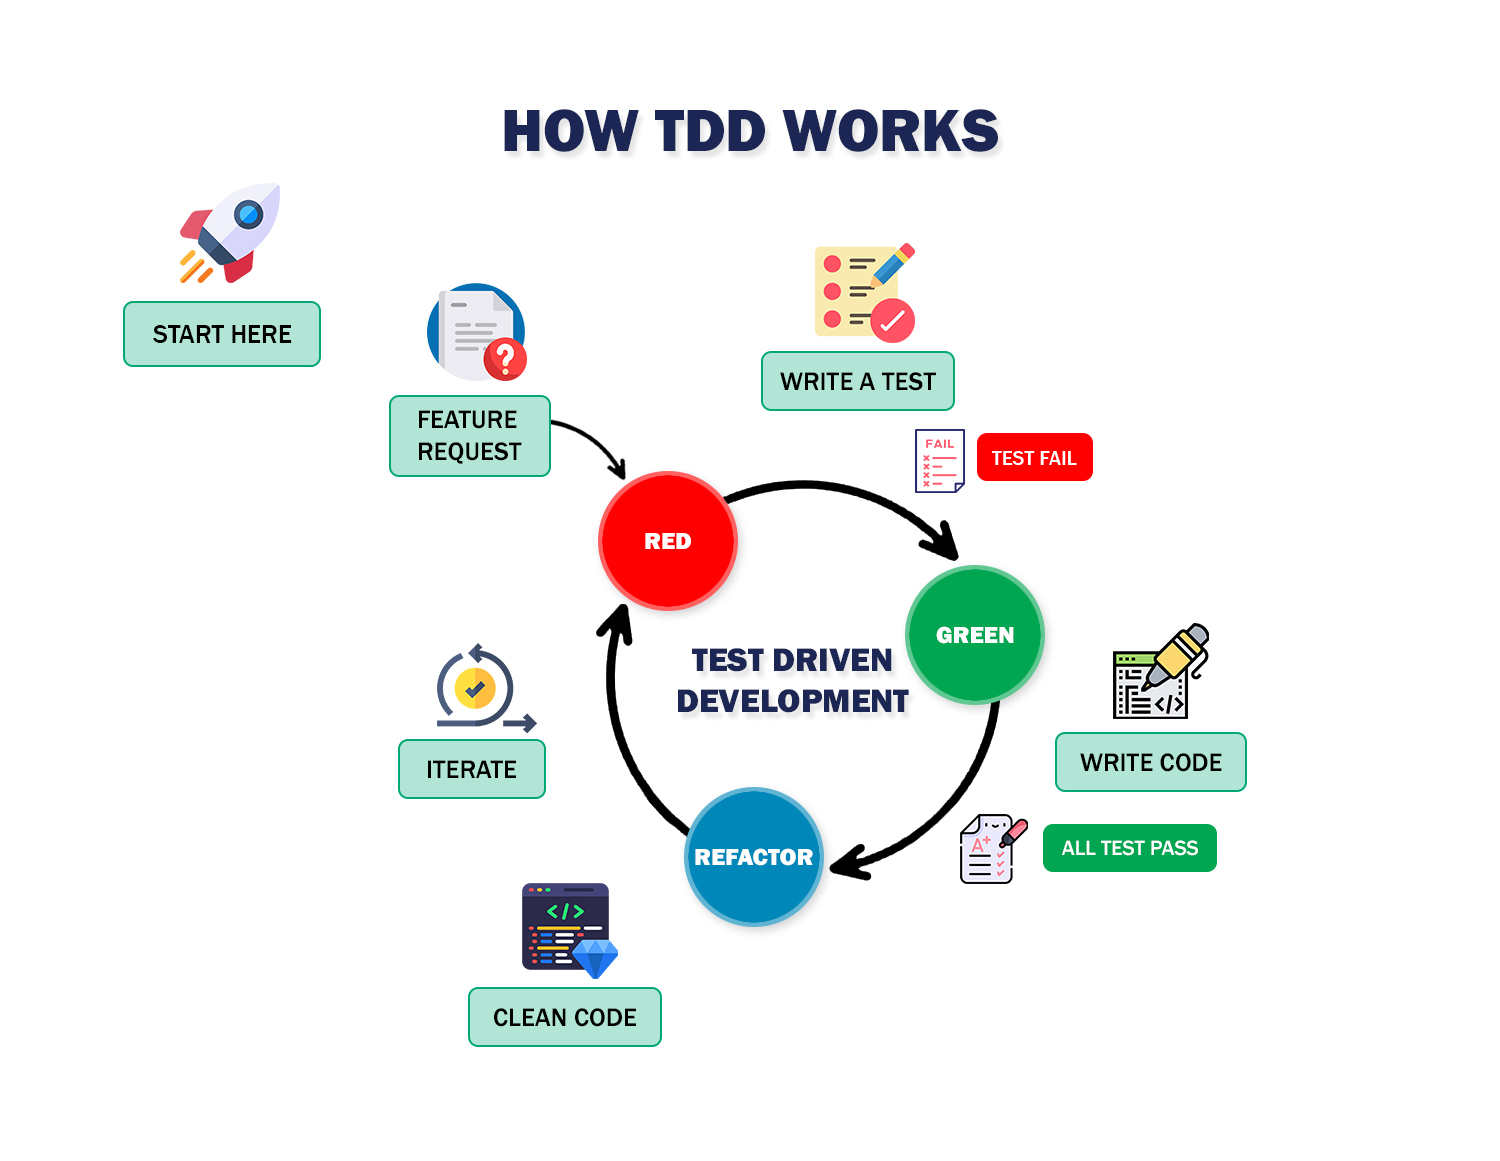 3 components of TDD (Test-driven development)